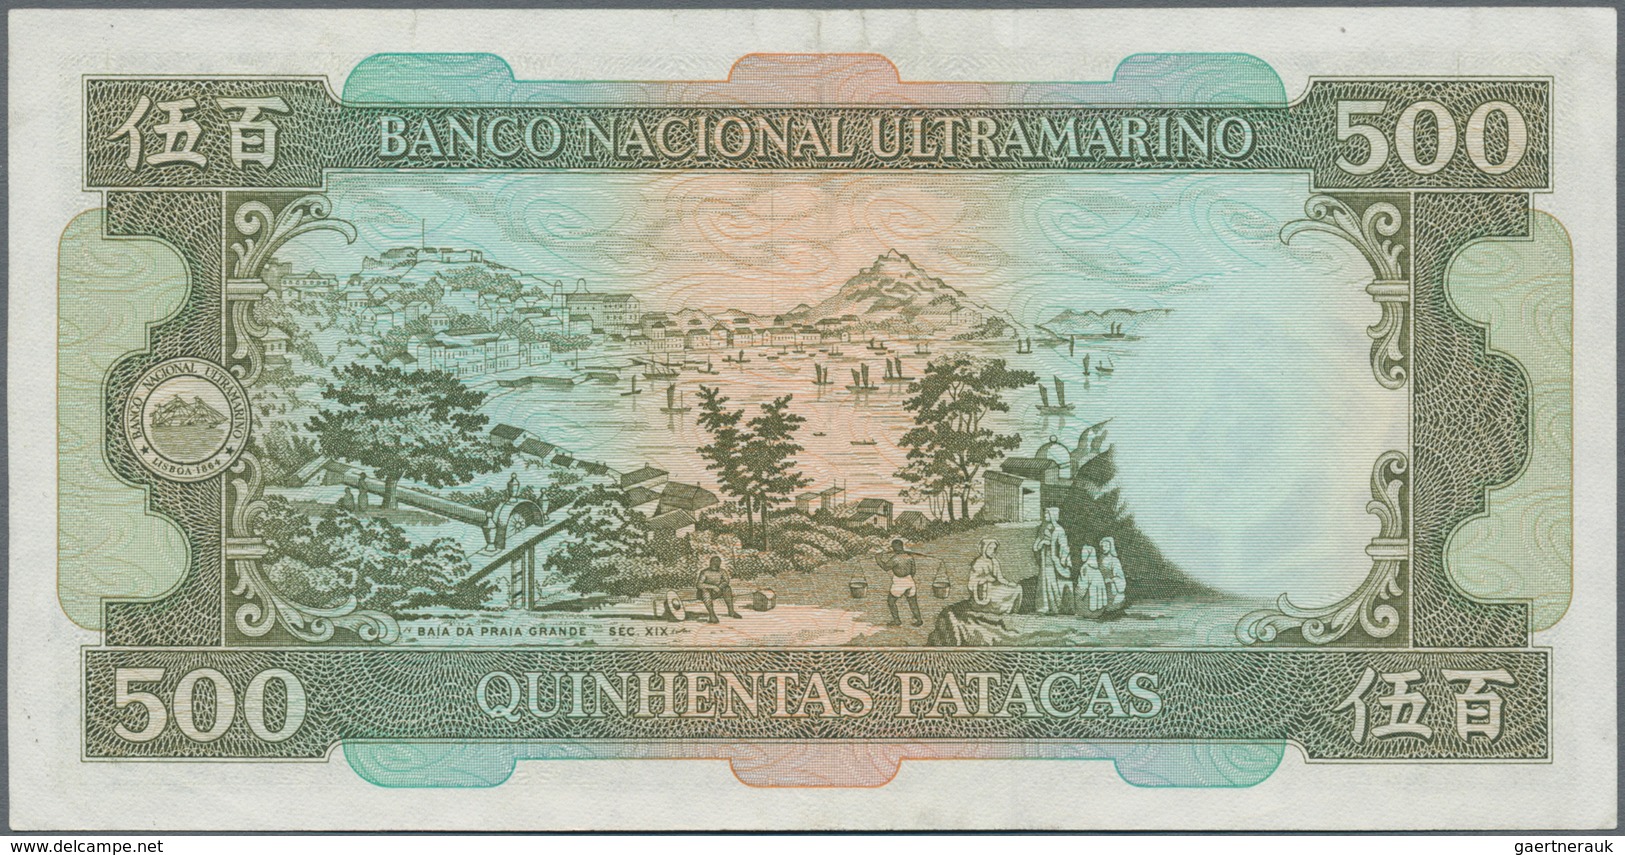 Macau / Macao: Banco Nacional Ultramarino500 Patacas 1984, P.62 In Perfect UNC Condition - Macao